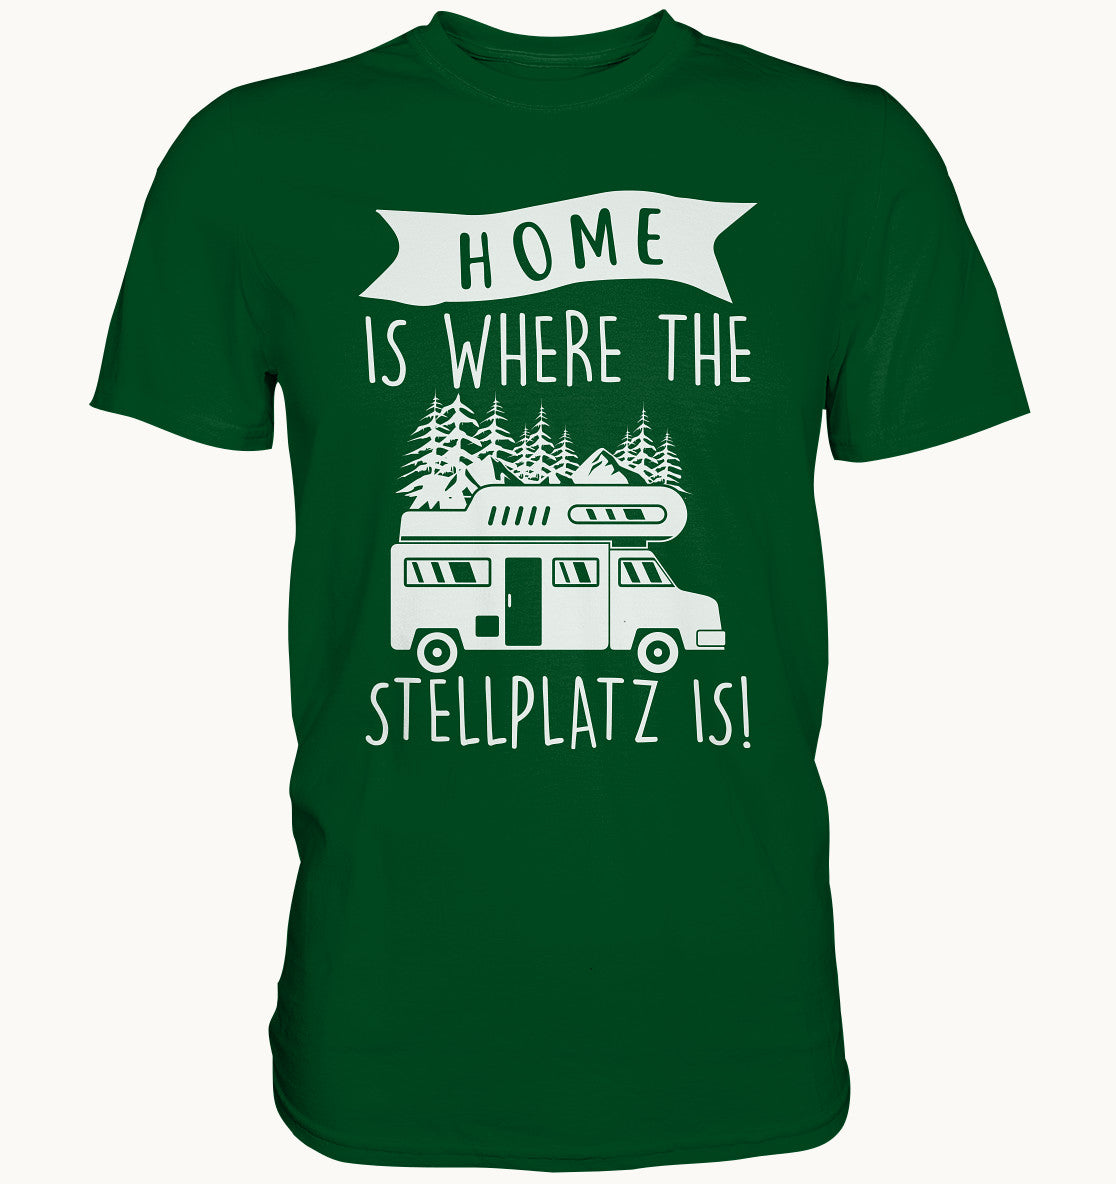 Home is where my Stellplatz is - Premium Shirt